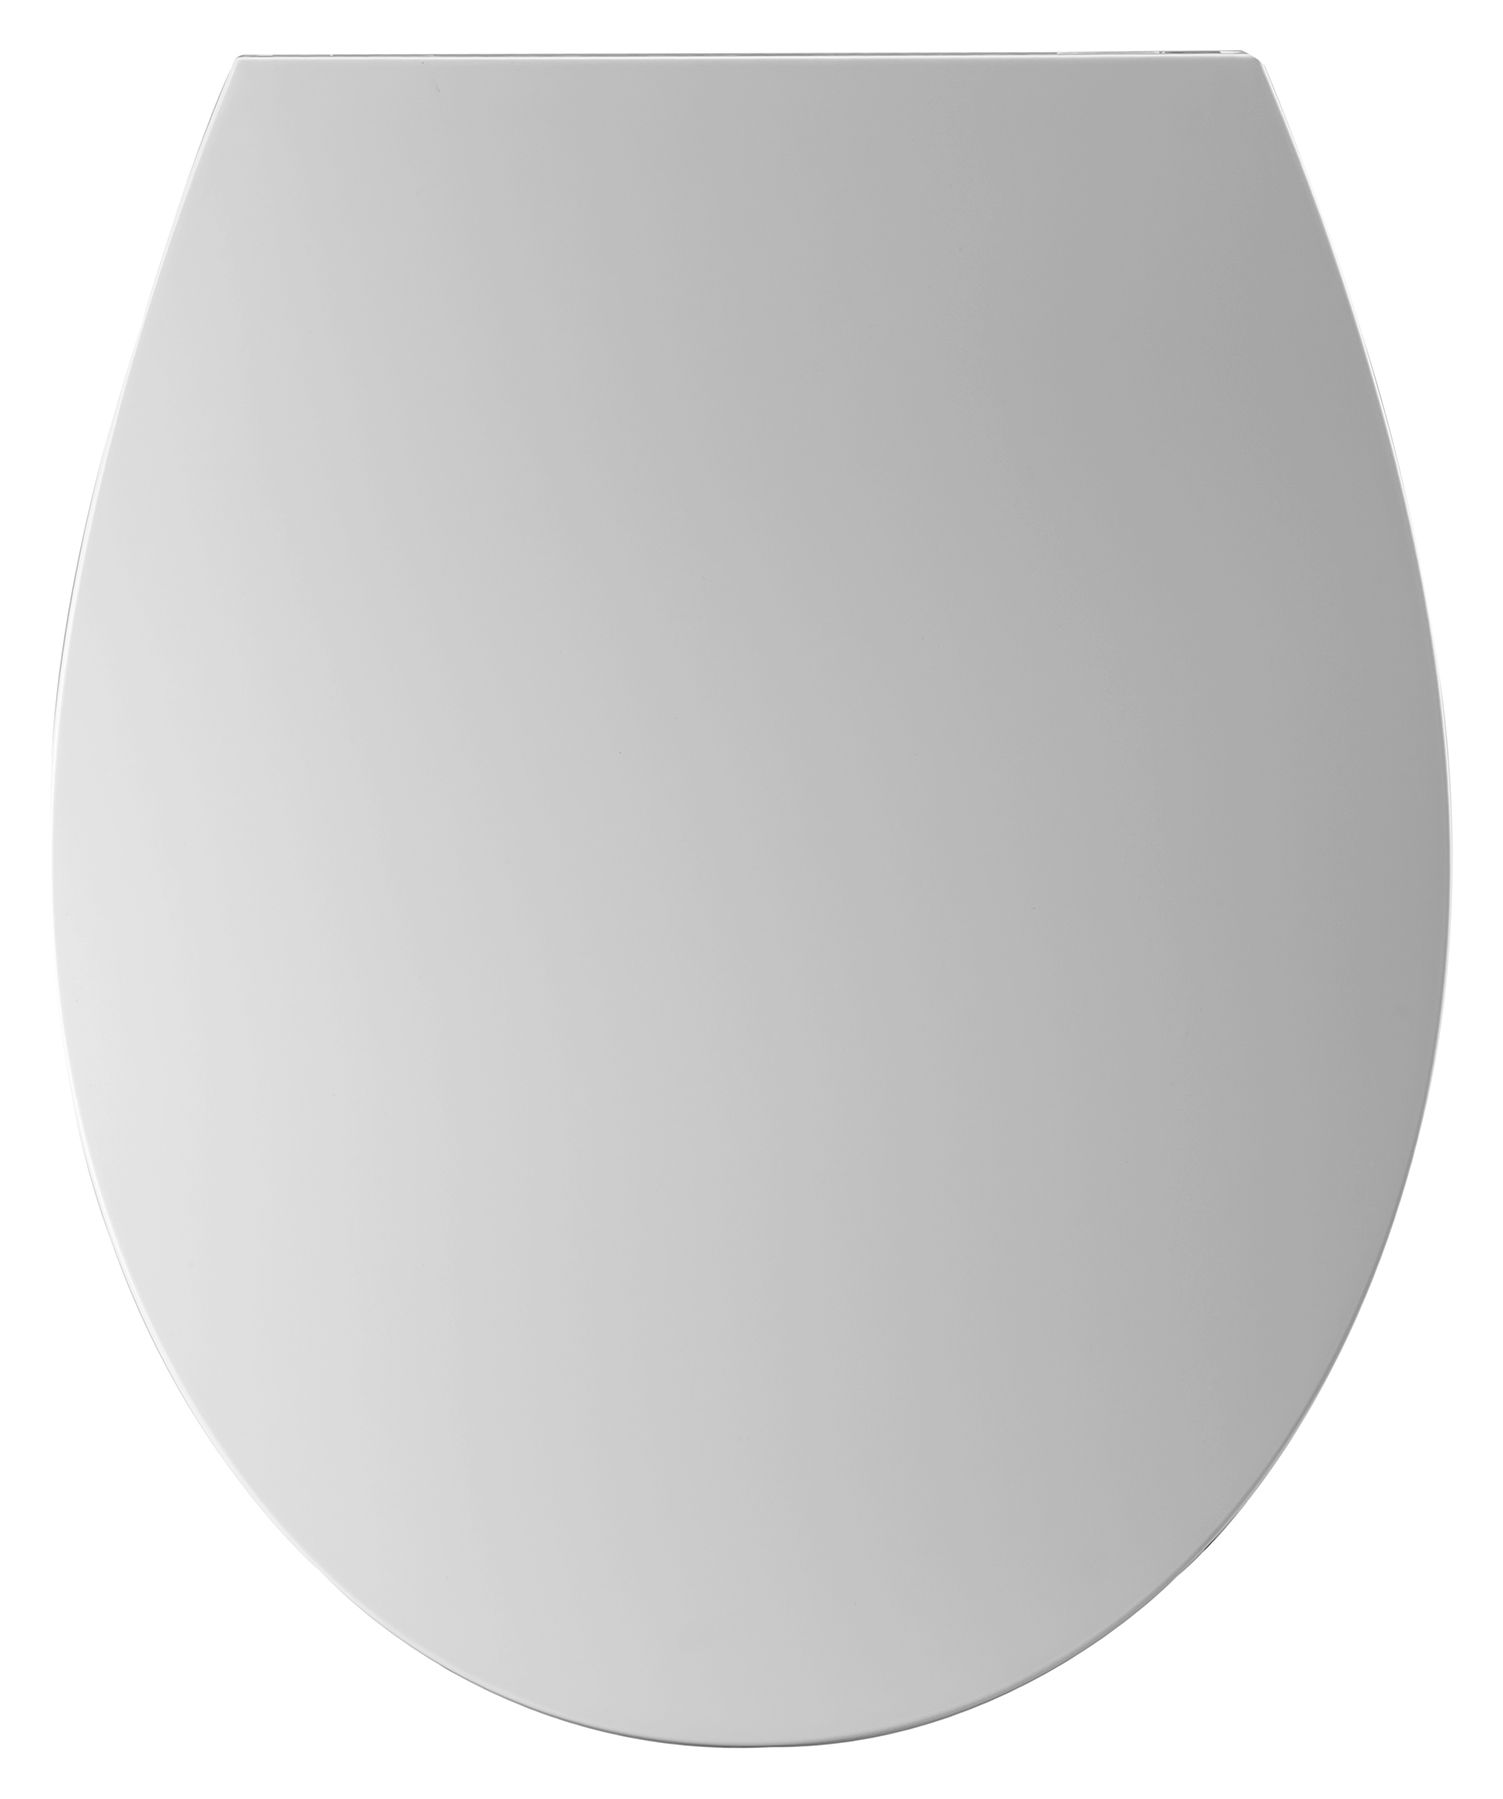 Image of Wickes Polypropylene Plastic Standard Close Toilet Seat - White